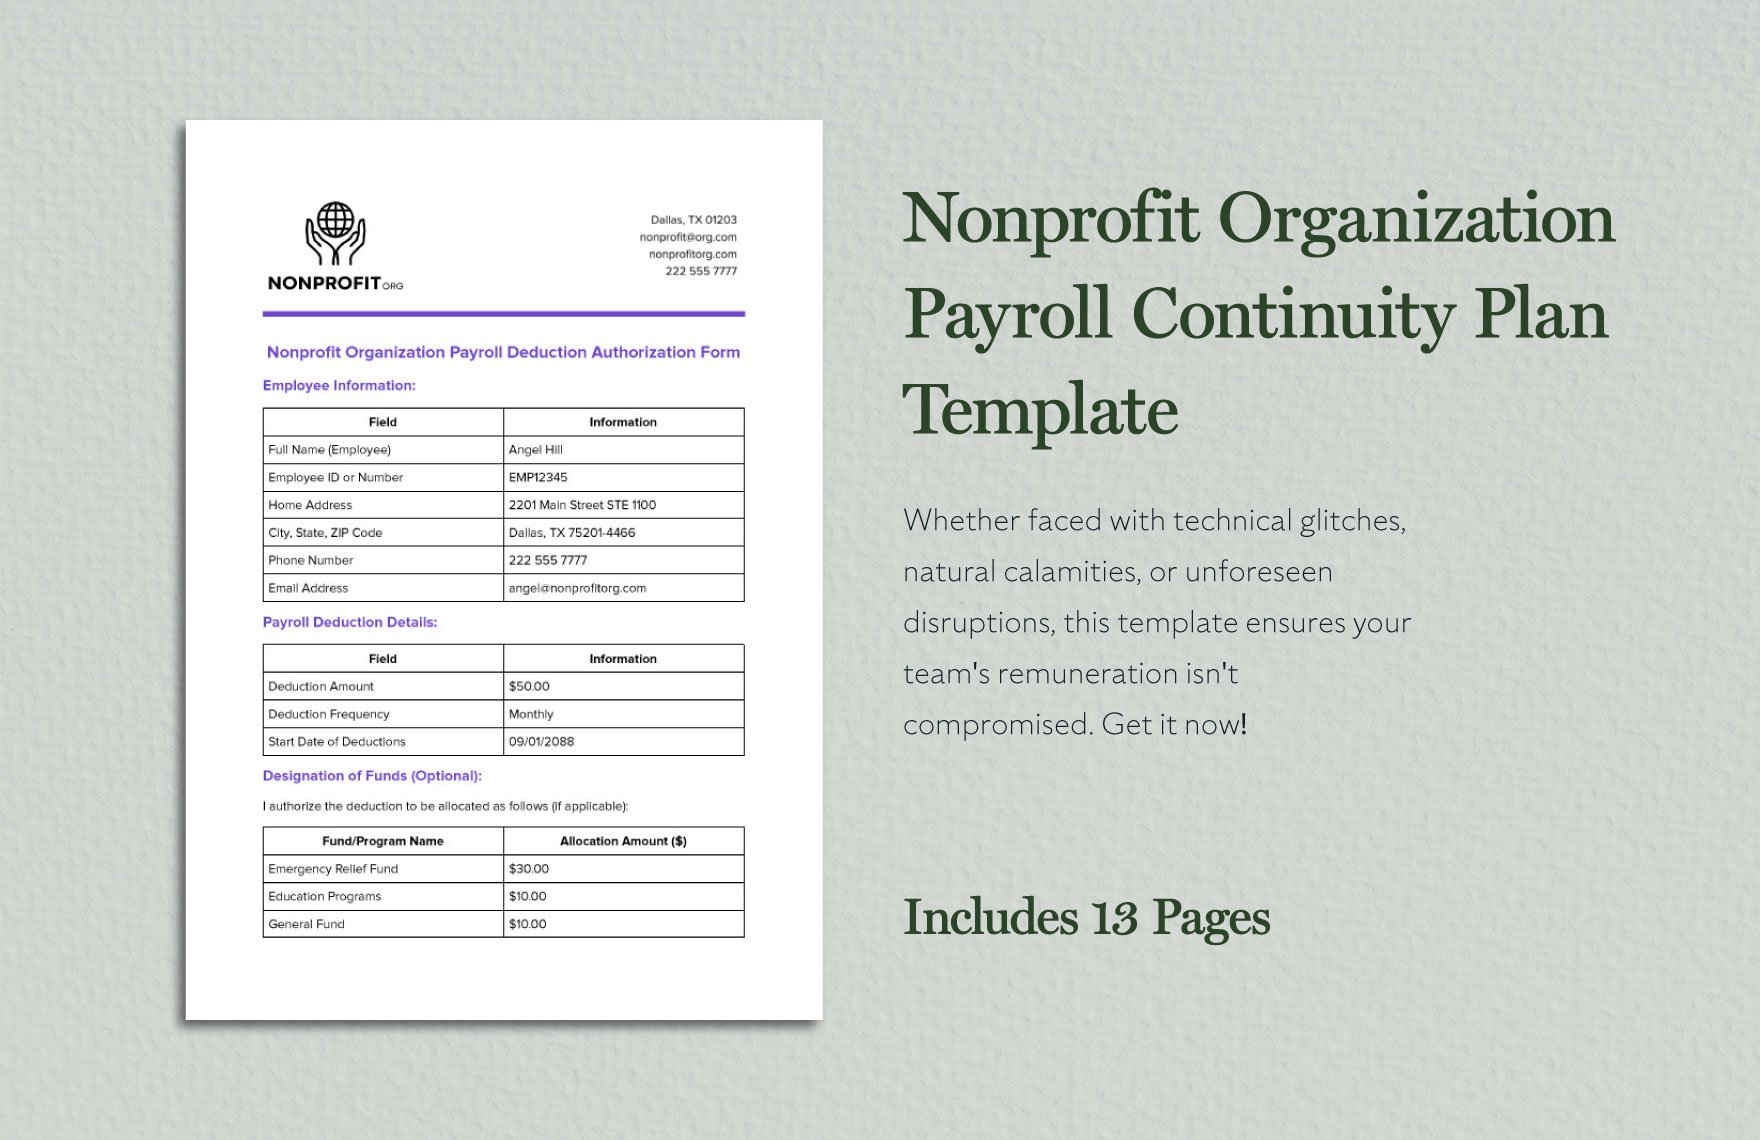 Nonprofit Organization Payroll Continuity Plan Template